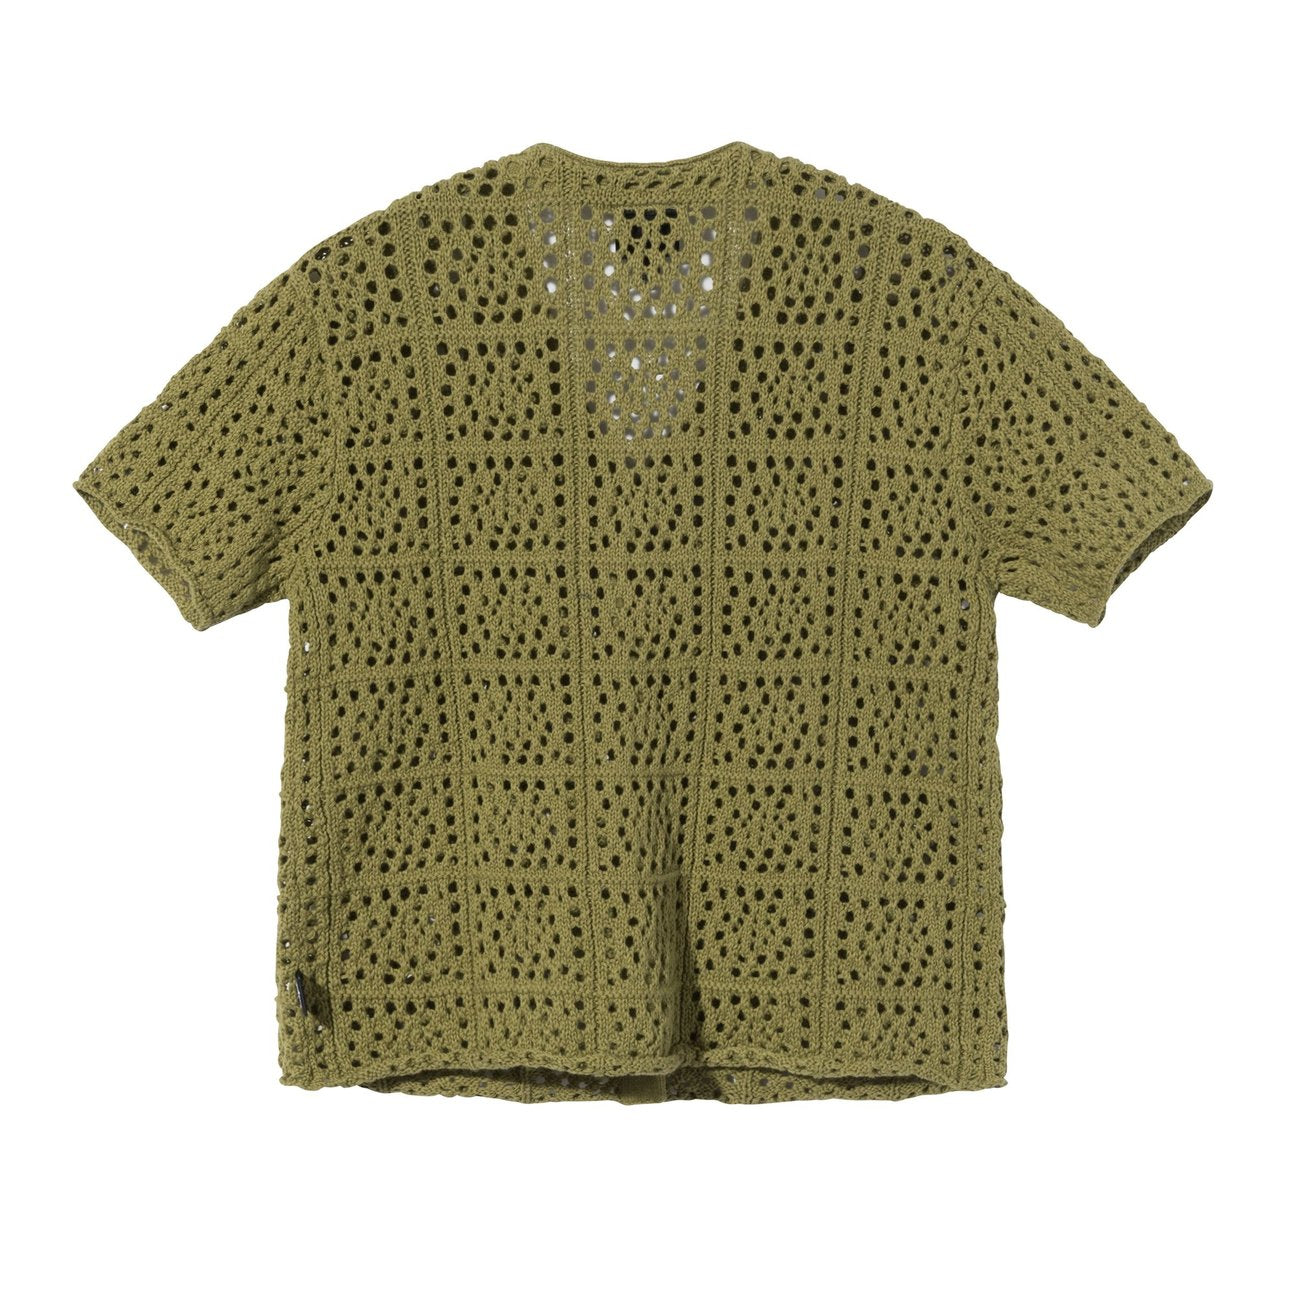 信頼 STUSSY SAMIRA CROCHET TOP crochet shirt | artfive.co.jp